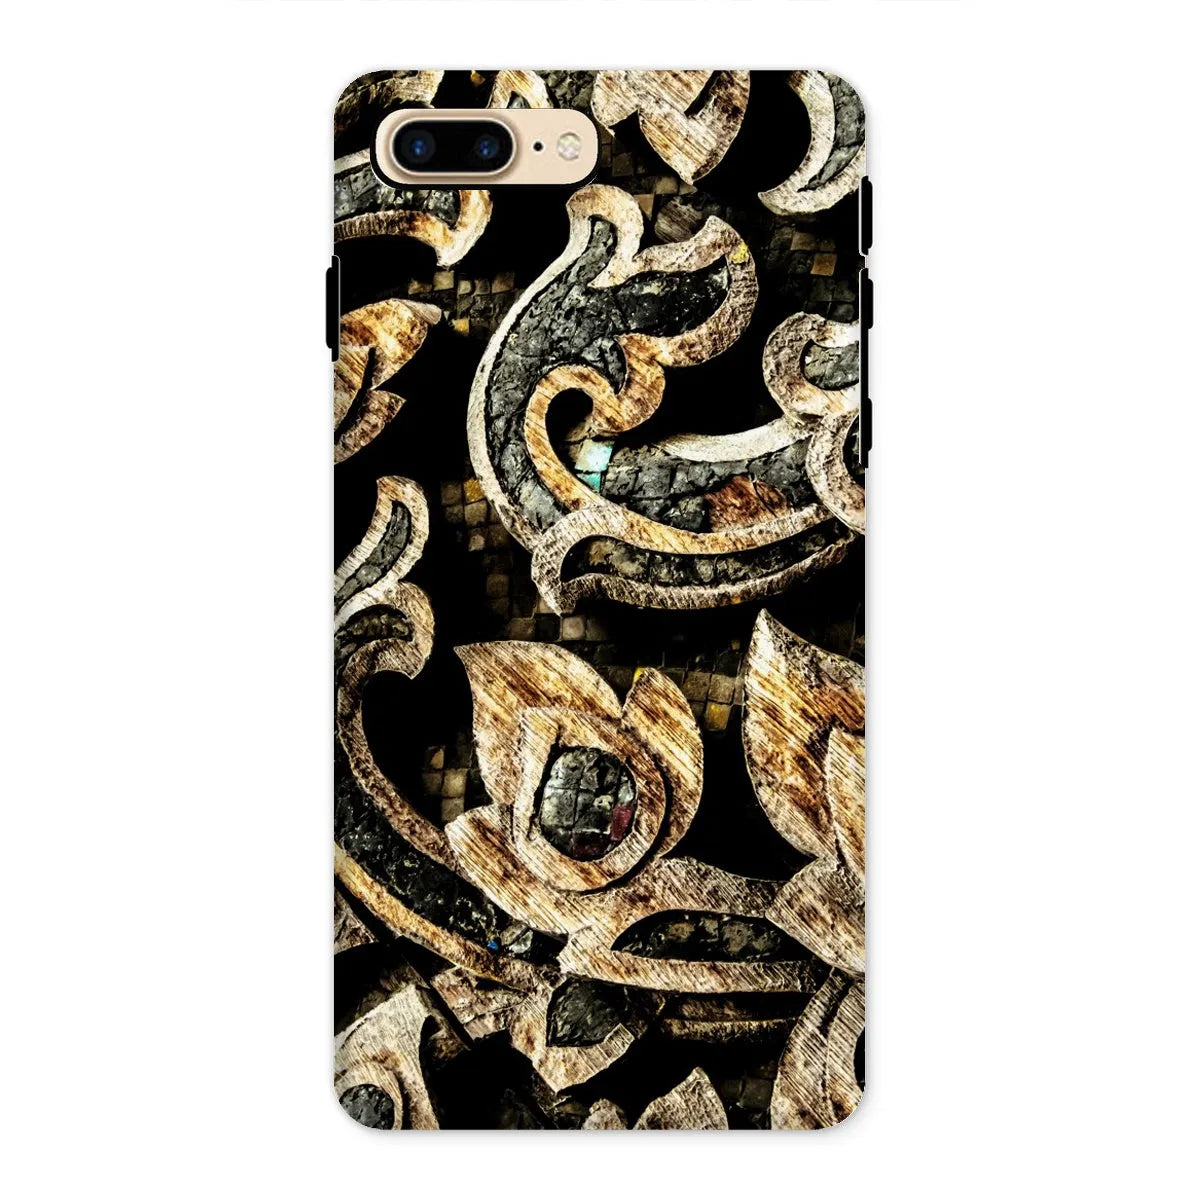 Against The Grain Tough Phone Case - Iphone 8 Plus / Matte - Mobile Phone Cases - Aesthetic Art